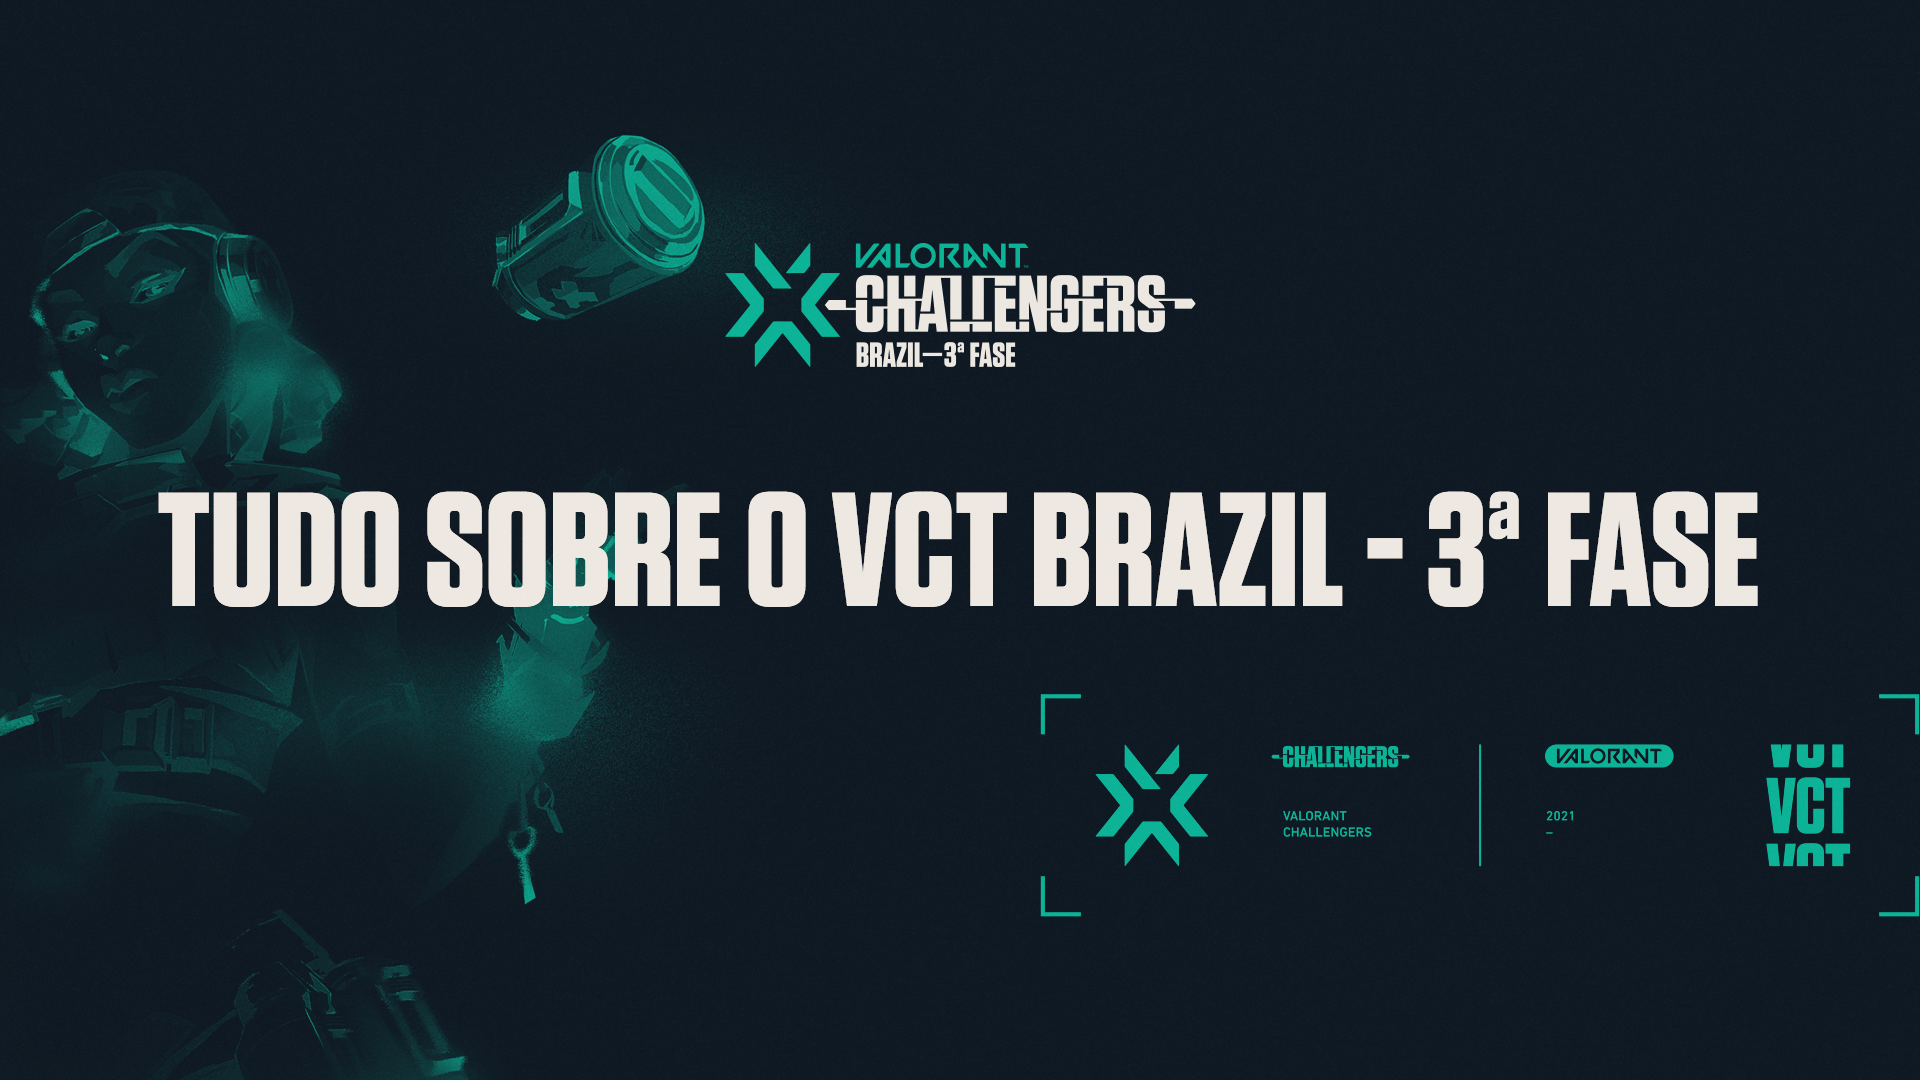 VALORANT Challengers Brazil - Etapa 1: Calendário Oficial